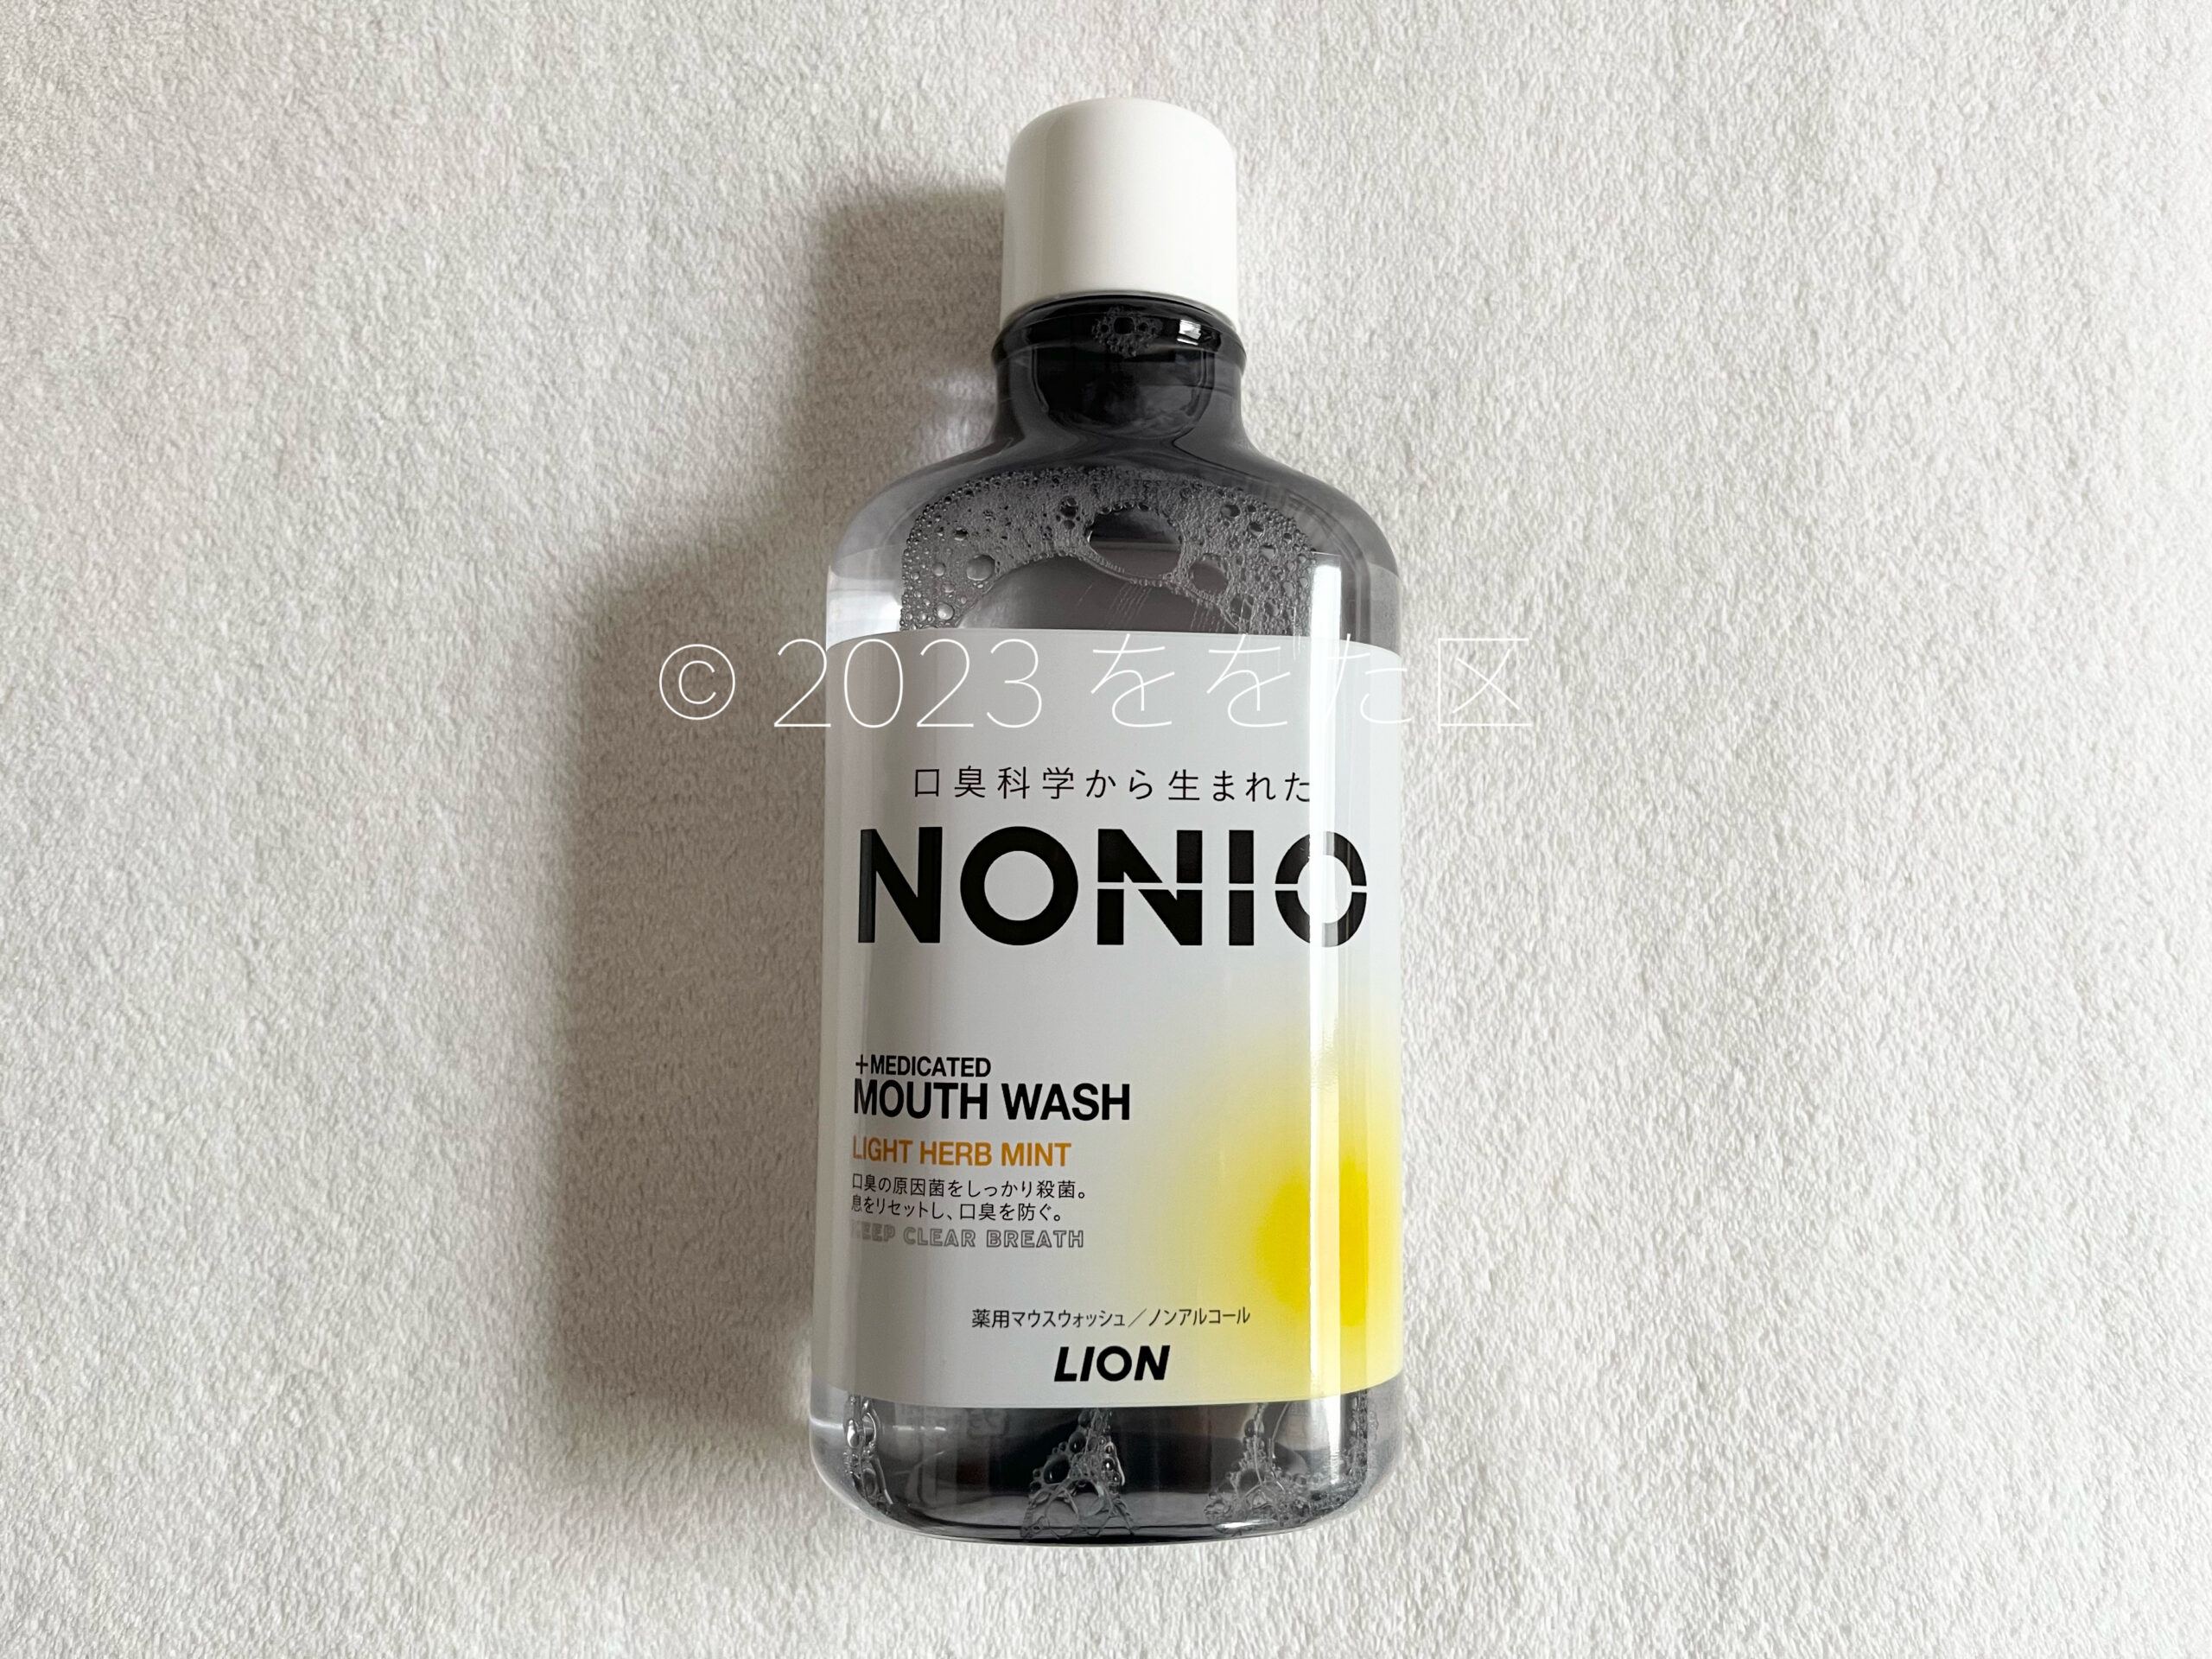 NONIO マウスウォッシュのパッケージデザイン